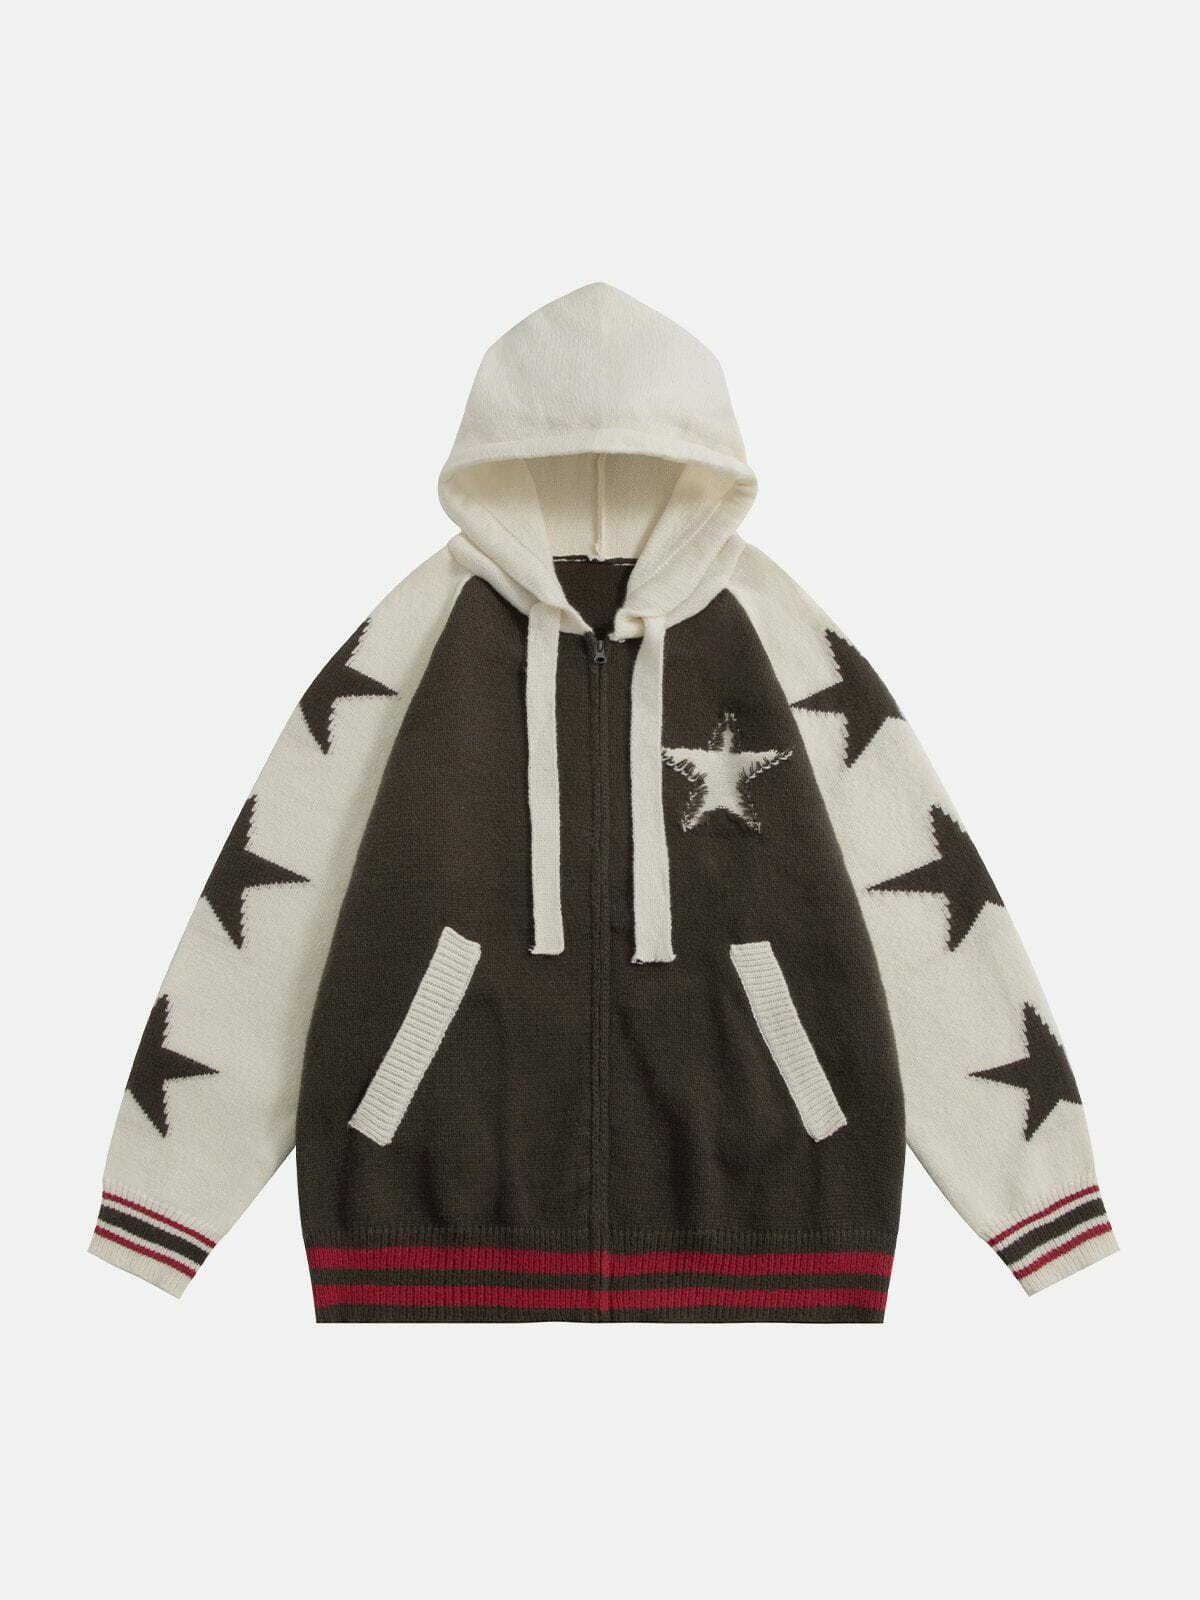 revolutionary pentagrams hoodie edgy patchwork design 5158